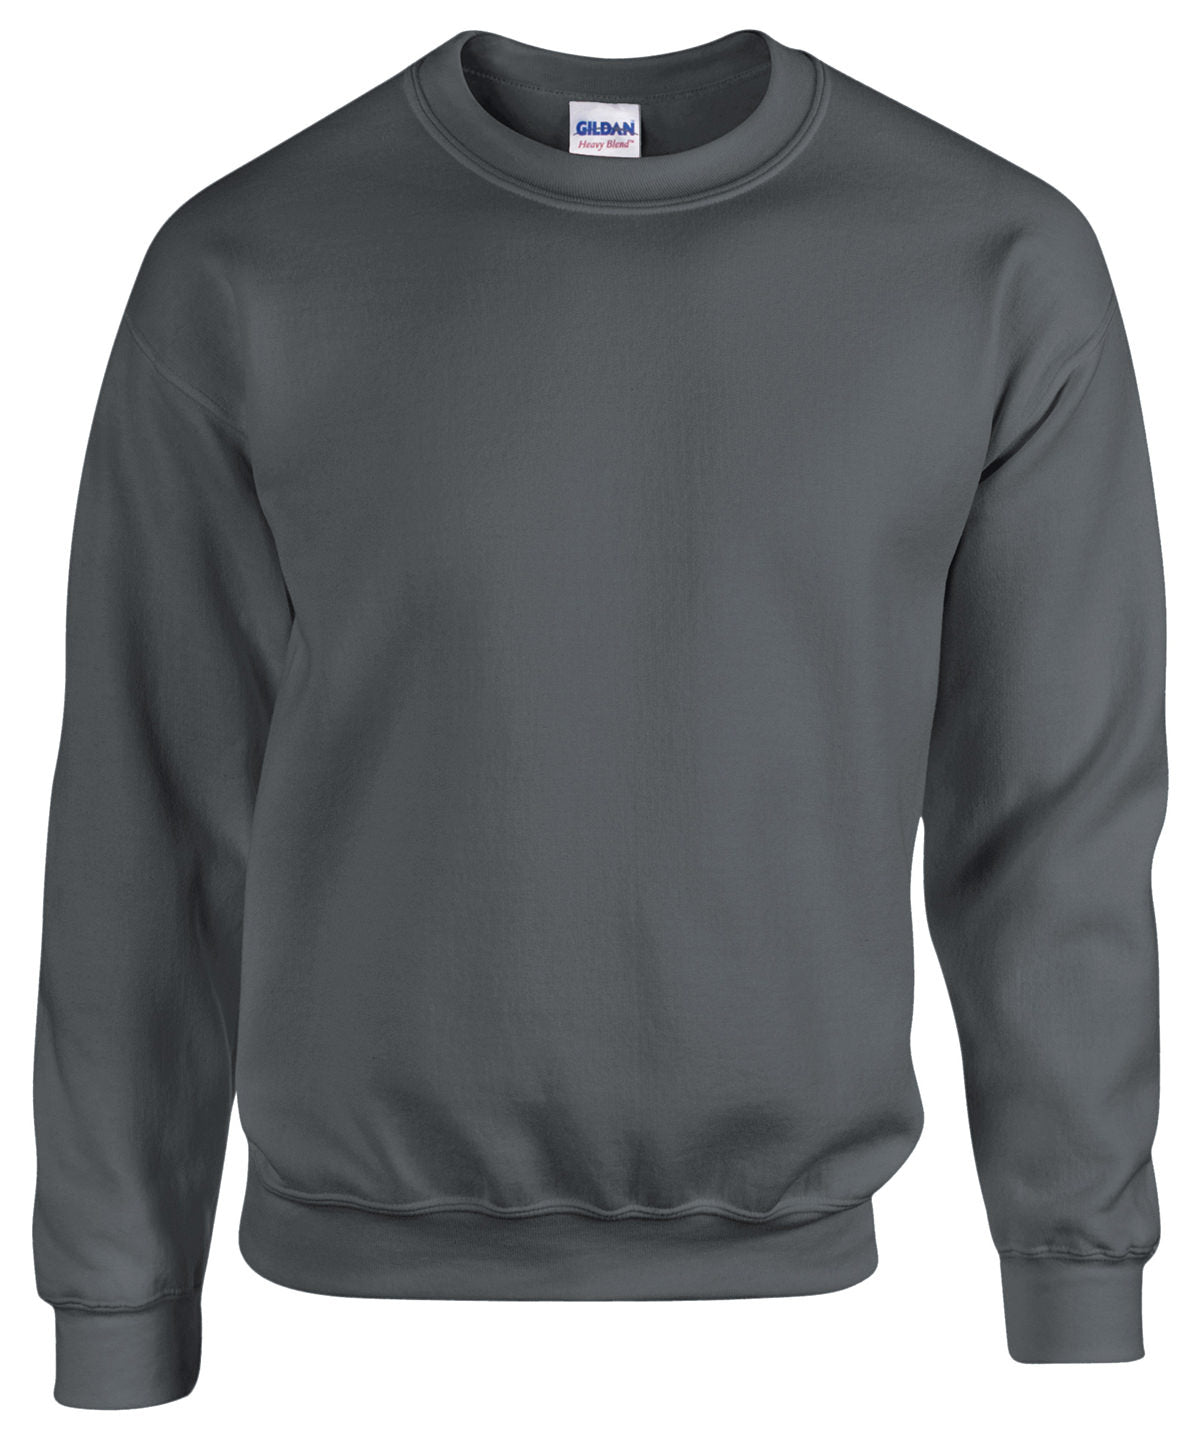 Personalised Sweatshirts - Dark Green Gildan Heavy Blend™ adult crew neck sweatshirt